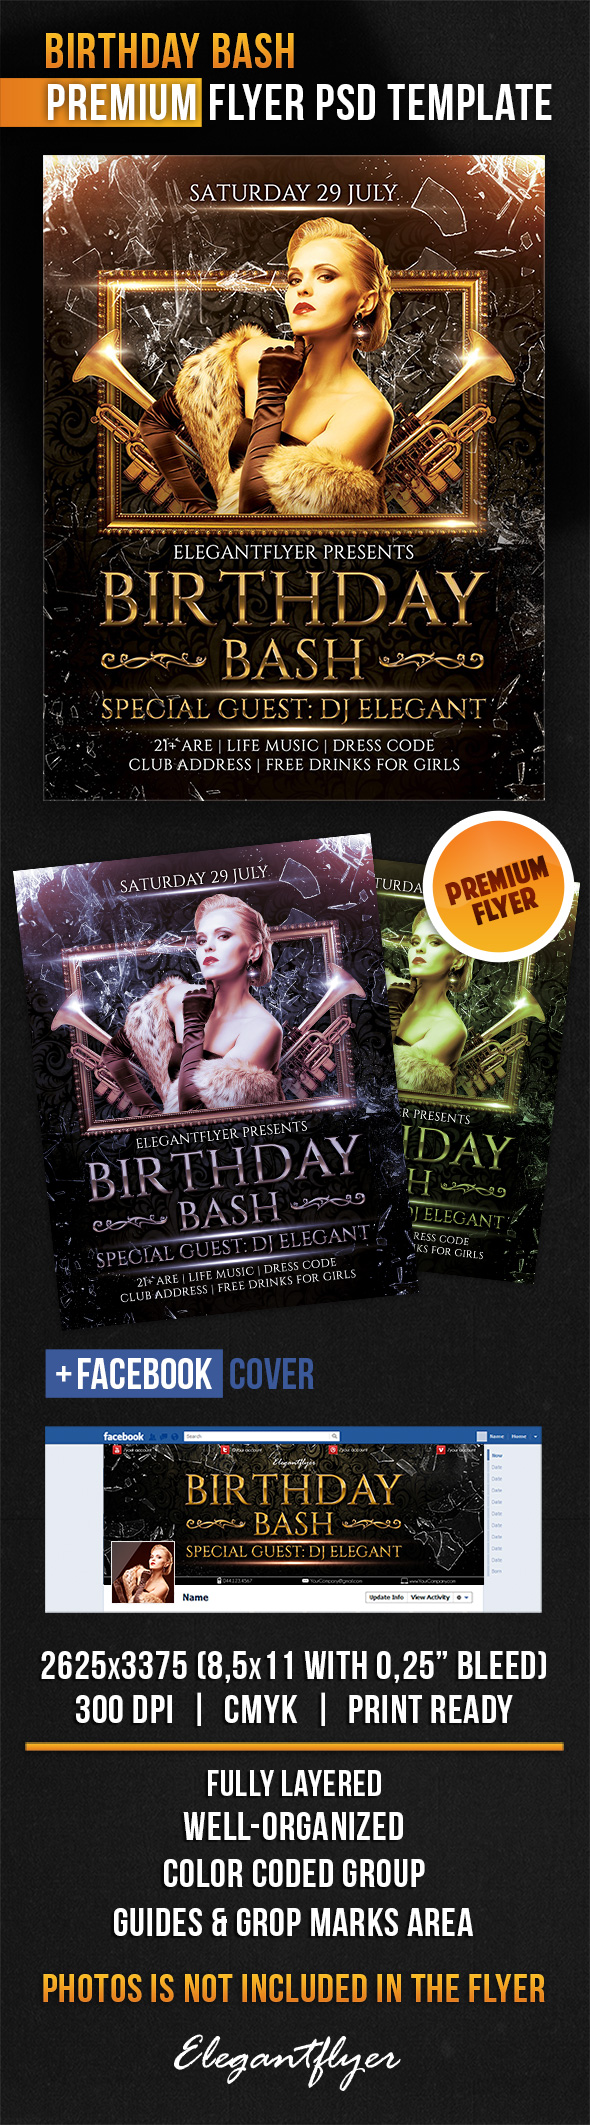 Birthday Bash Flyer Templates Free